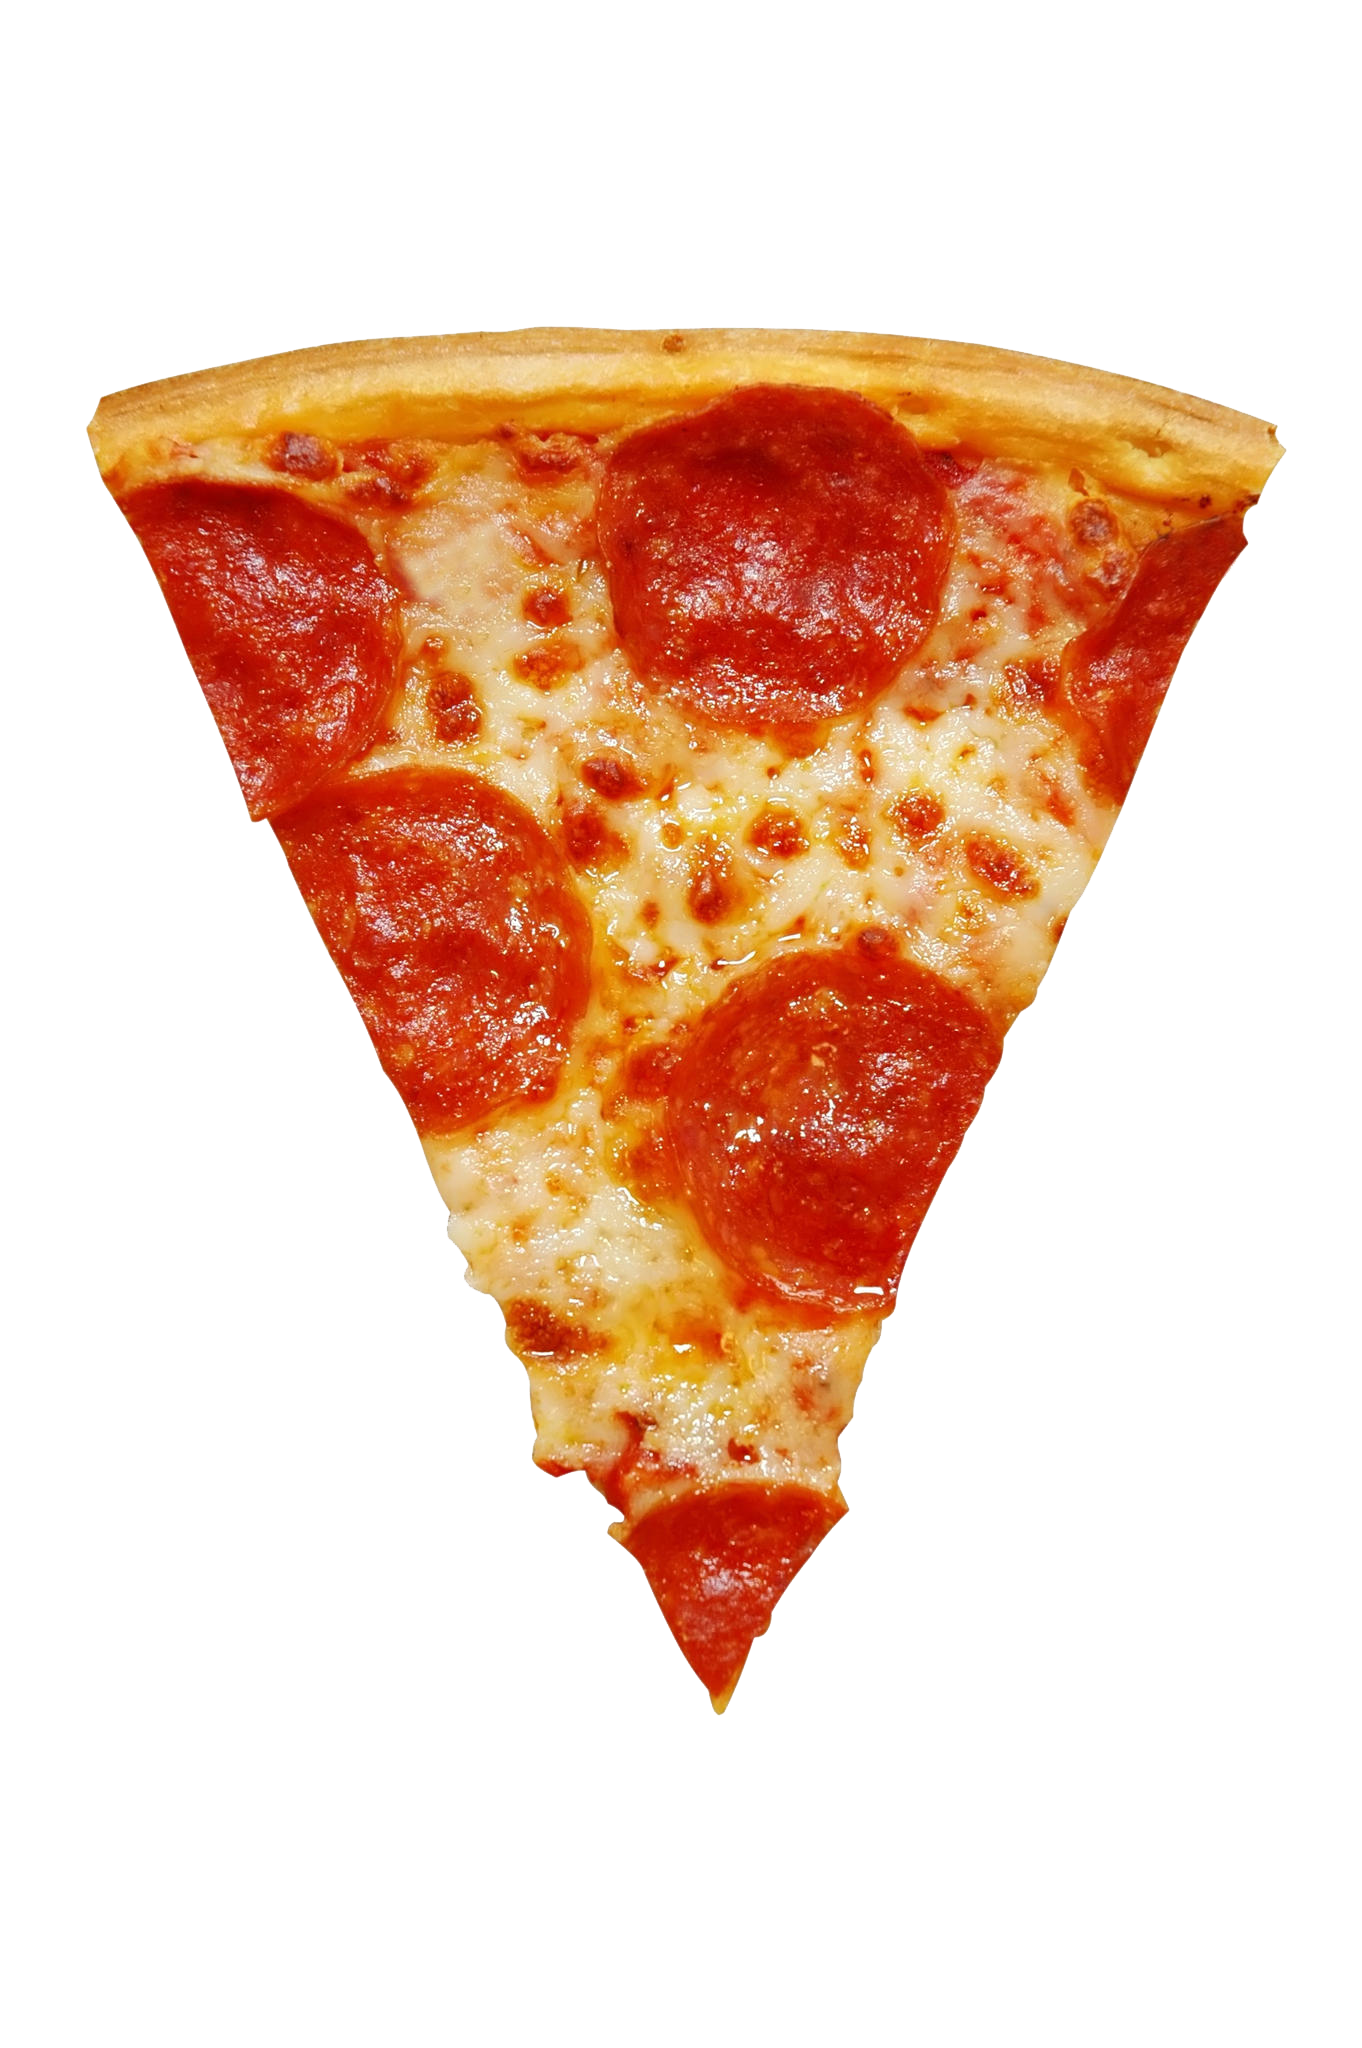 Download Pizza Slice HQ PNG Image | FreePNGImg